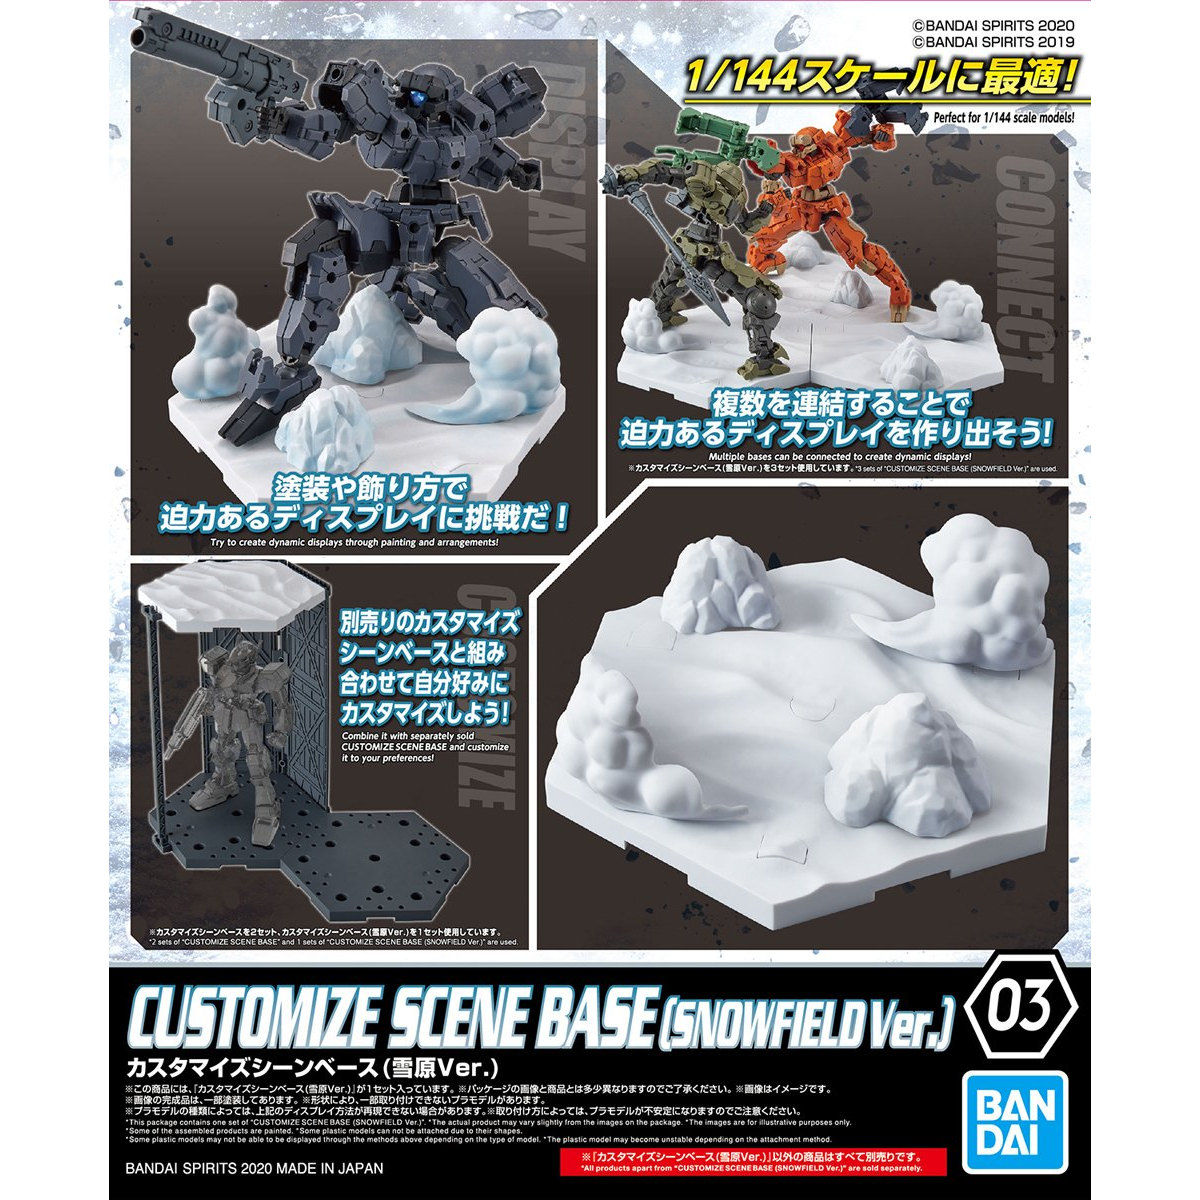 Customize Scene Base 03 (Snowfield Ver.) - Glacier Hobbies - Bandai